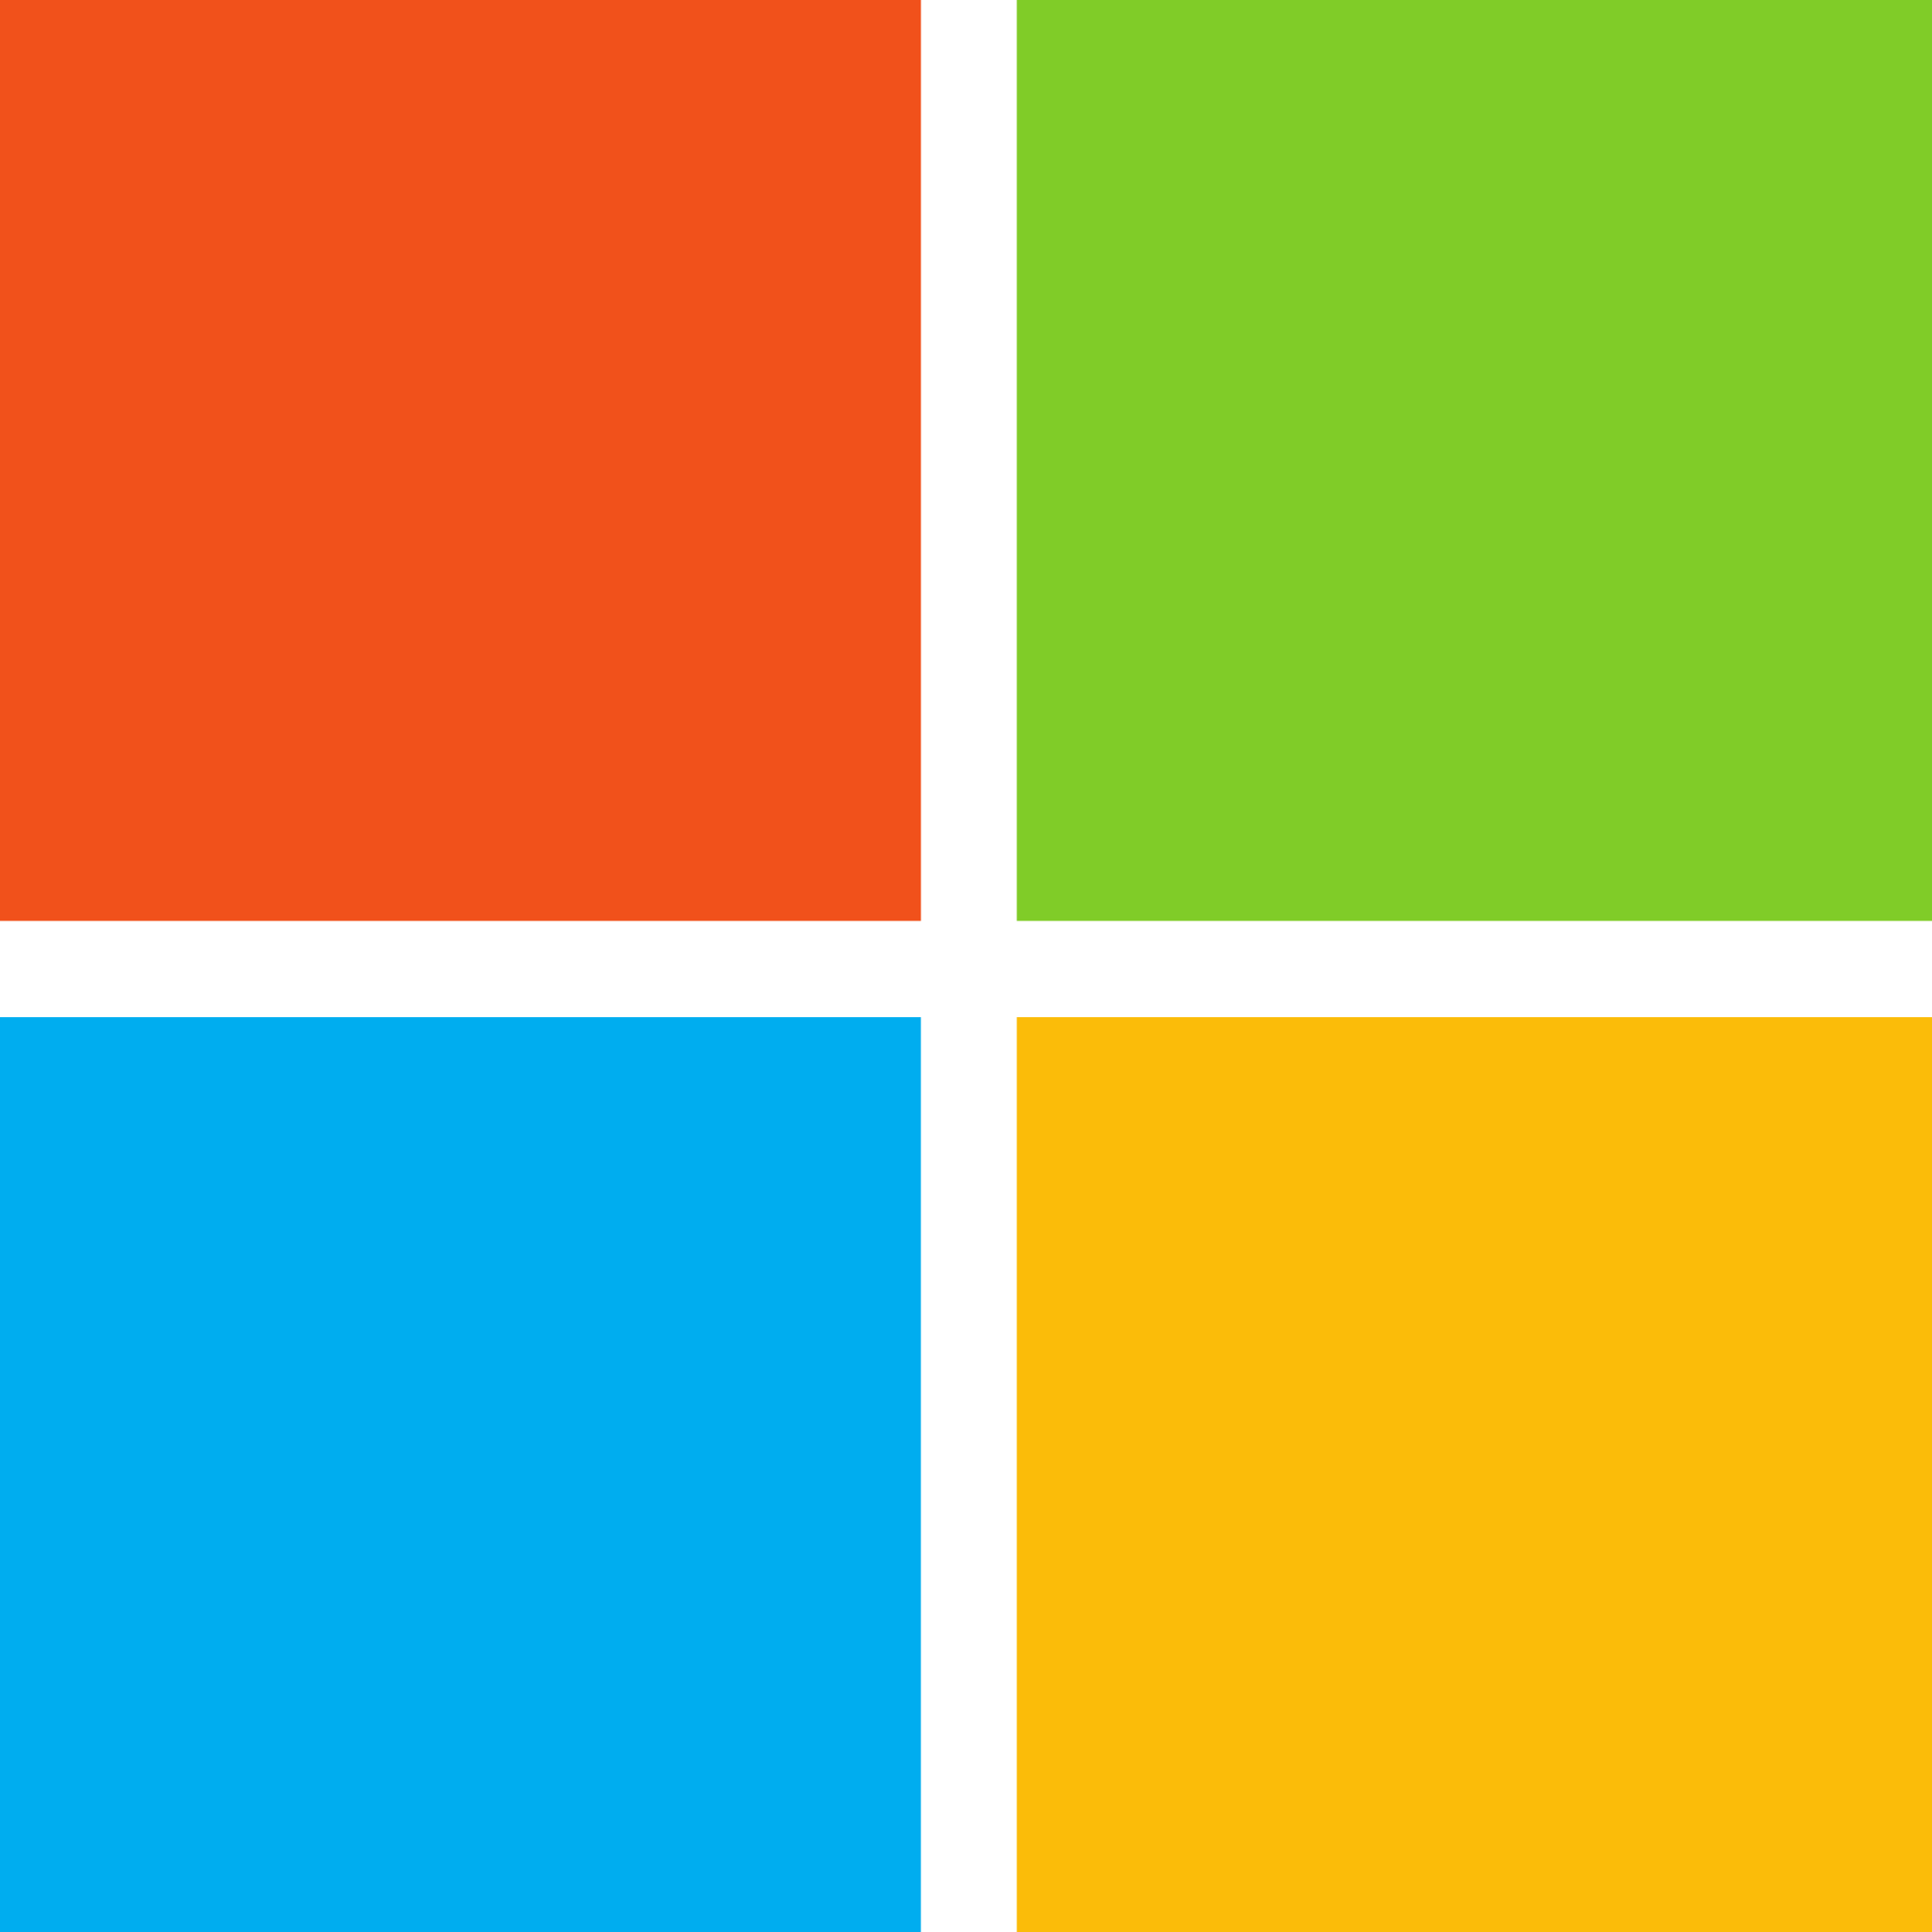 Microsoft Windows PNG Transparent - Microsoft Windows Png